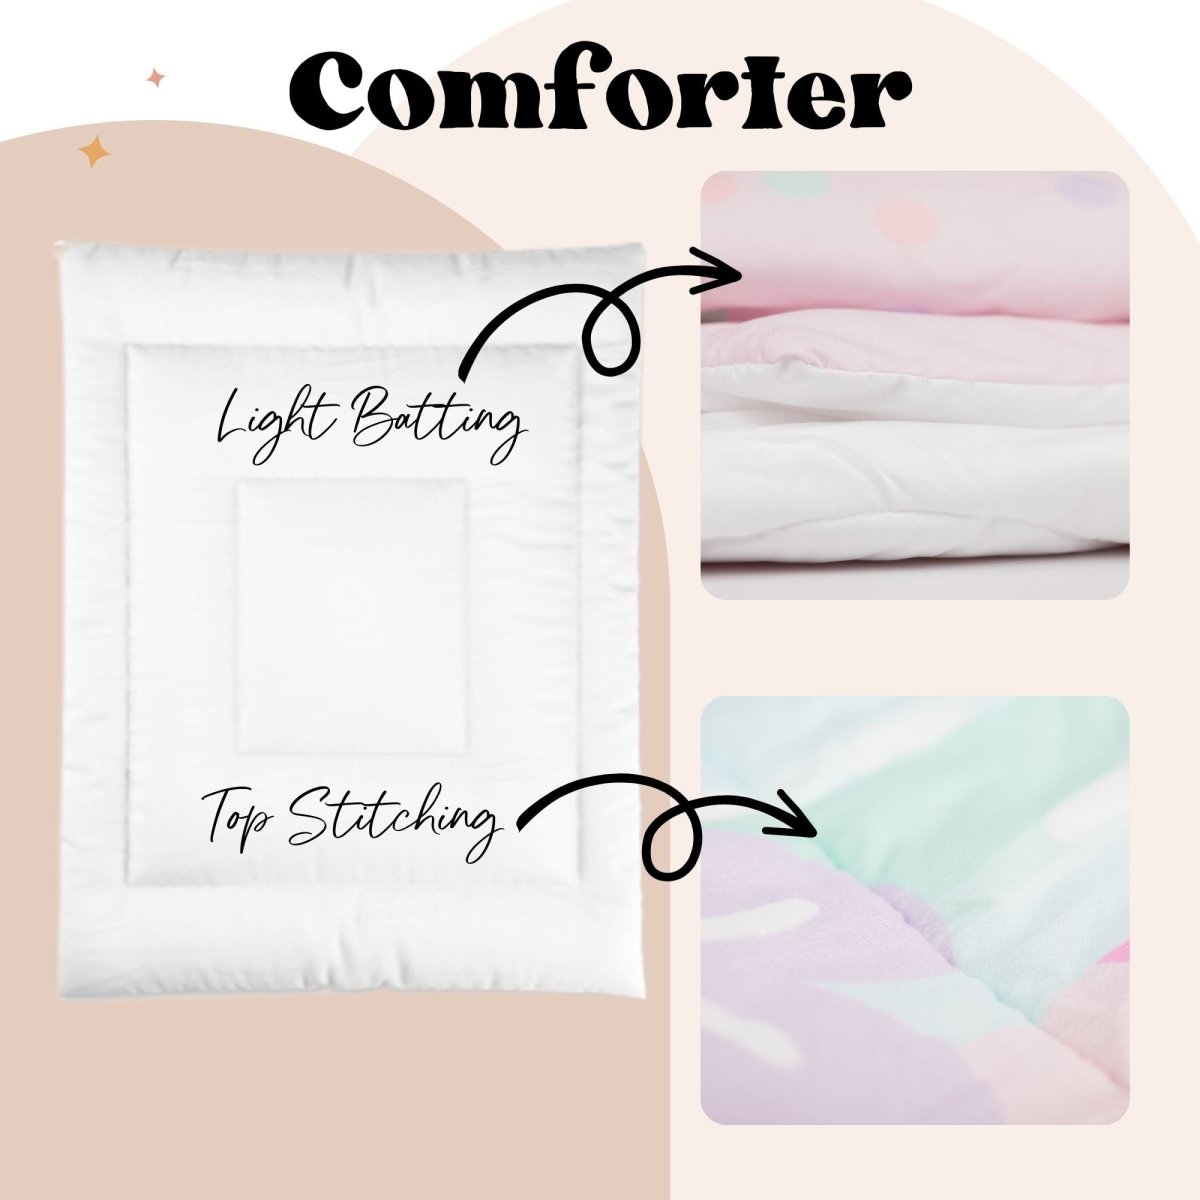 Tropical Flamingo Pink Kids Bedding Set (Comforter or Duvet Cover) - gender_girl, text, Theme_Tropical